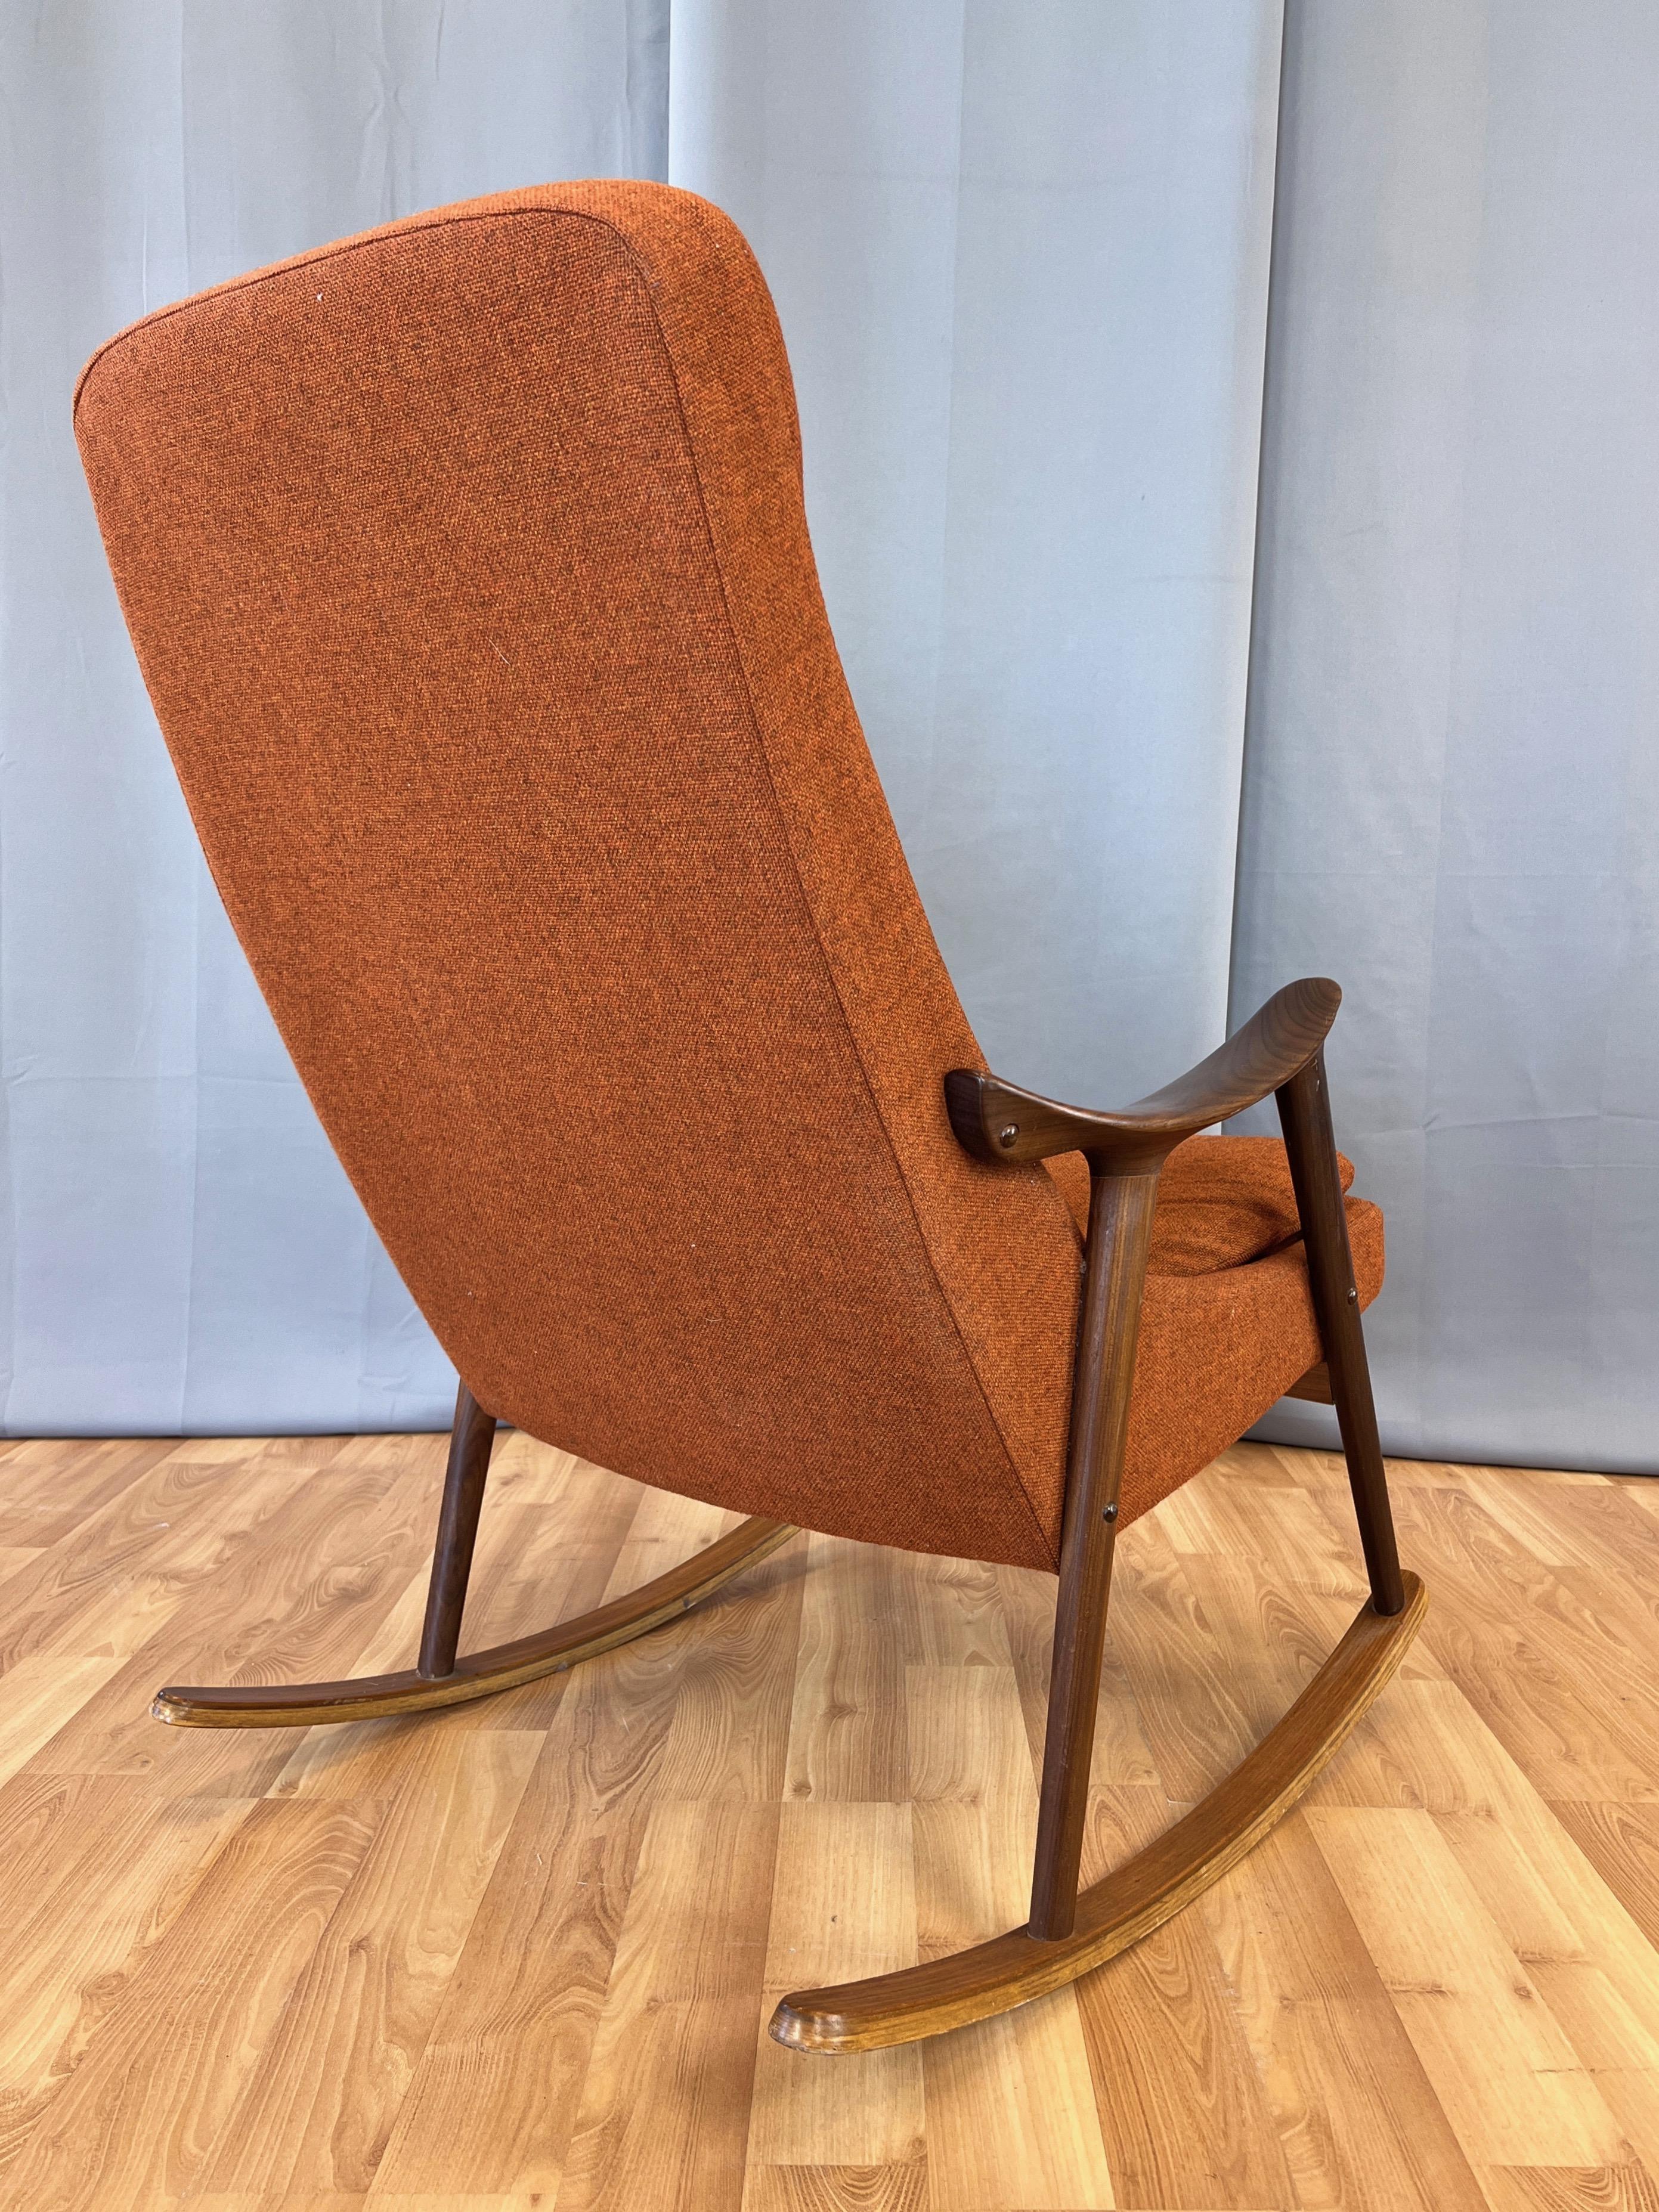 Mid-20th Century Ingmar Relling for Westnofa High-Back Sculptural Teak Rocking Chair, 1960s For Sale